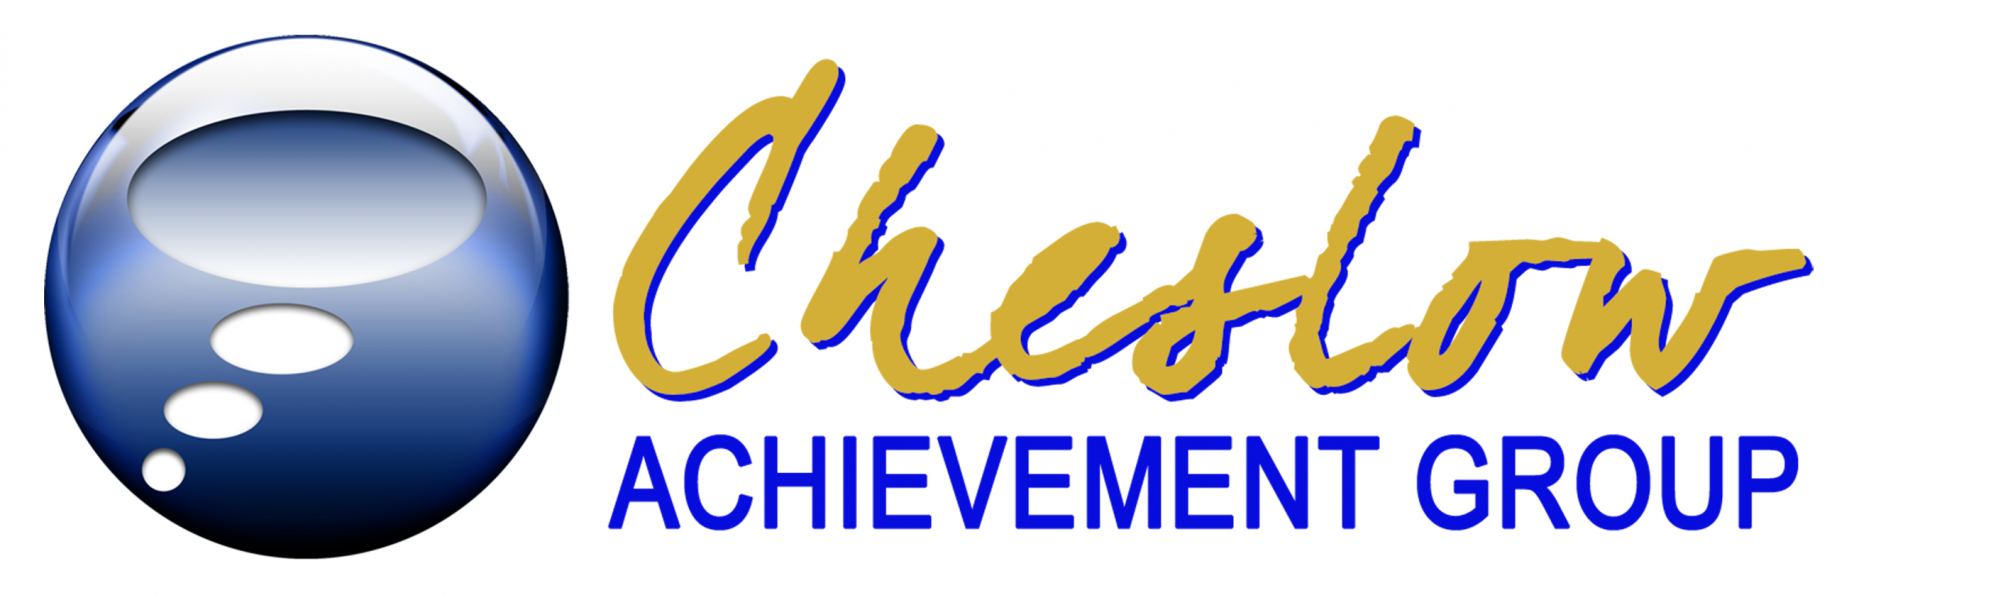 Cheslow Achievement Group Logo